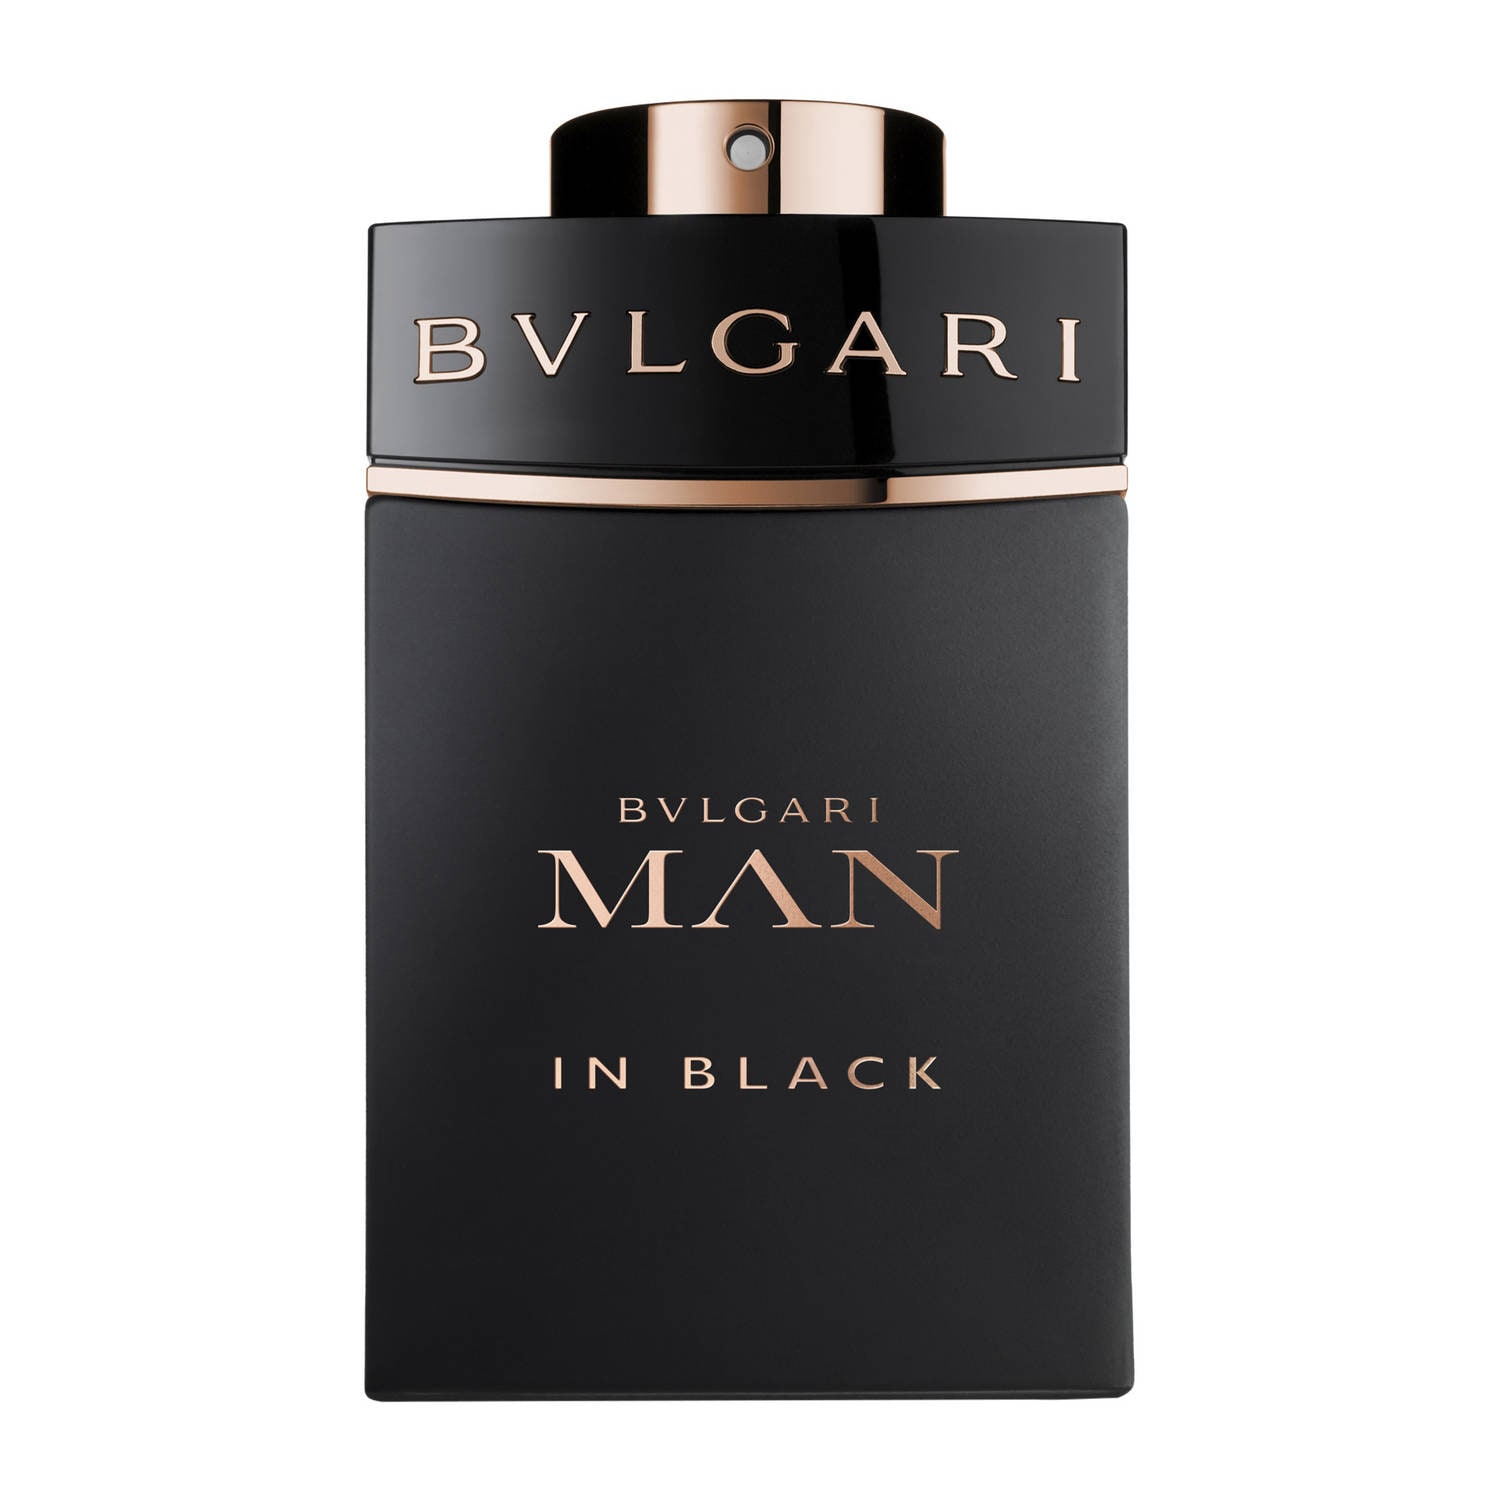 Man in Black bvlgari